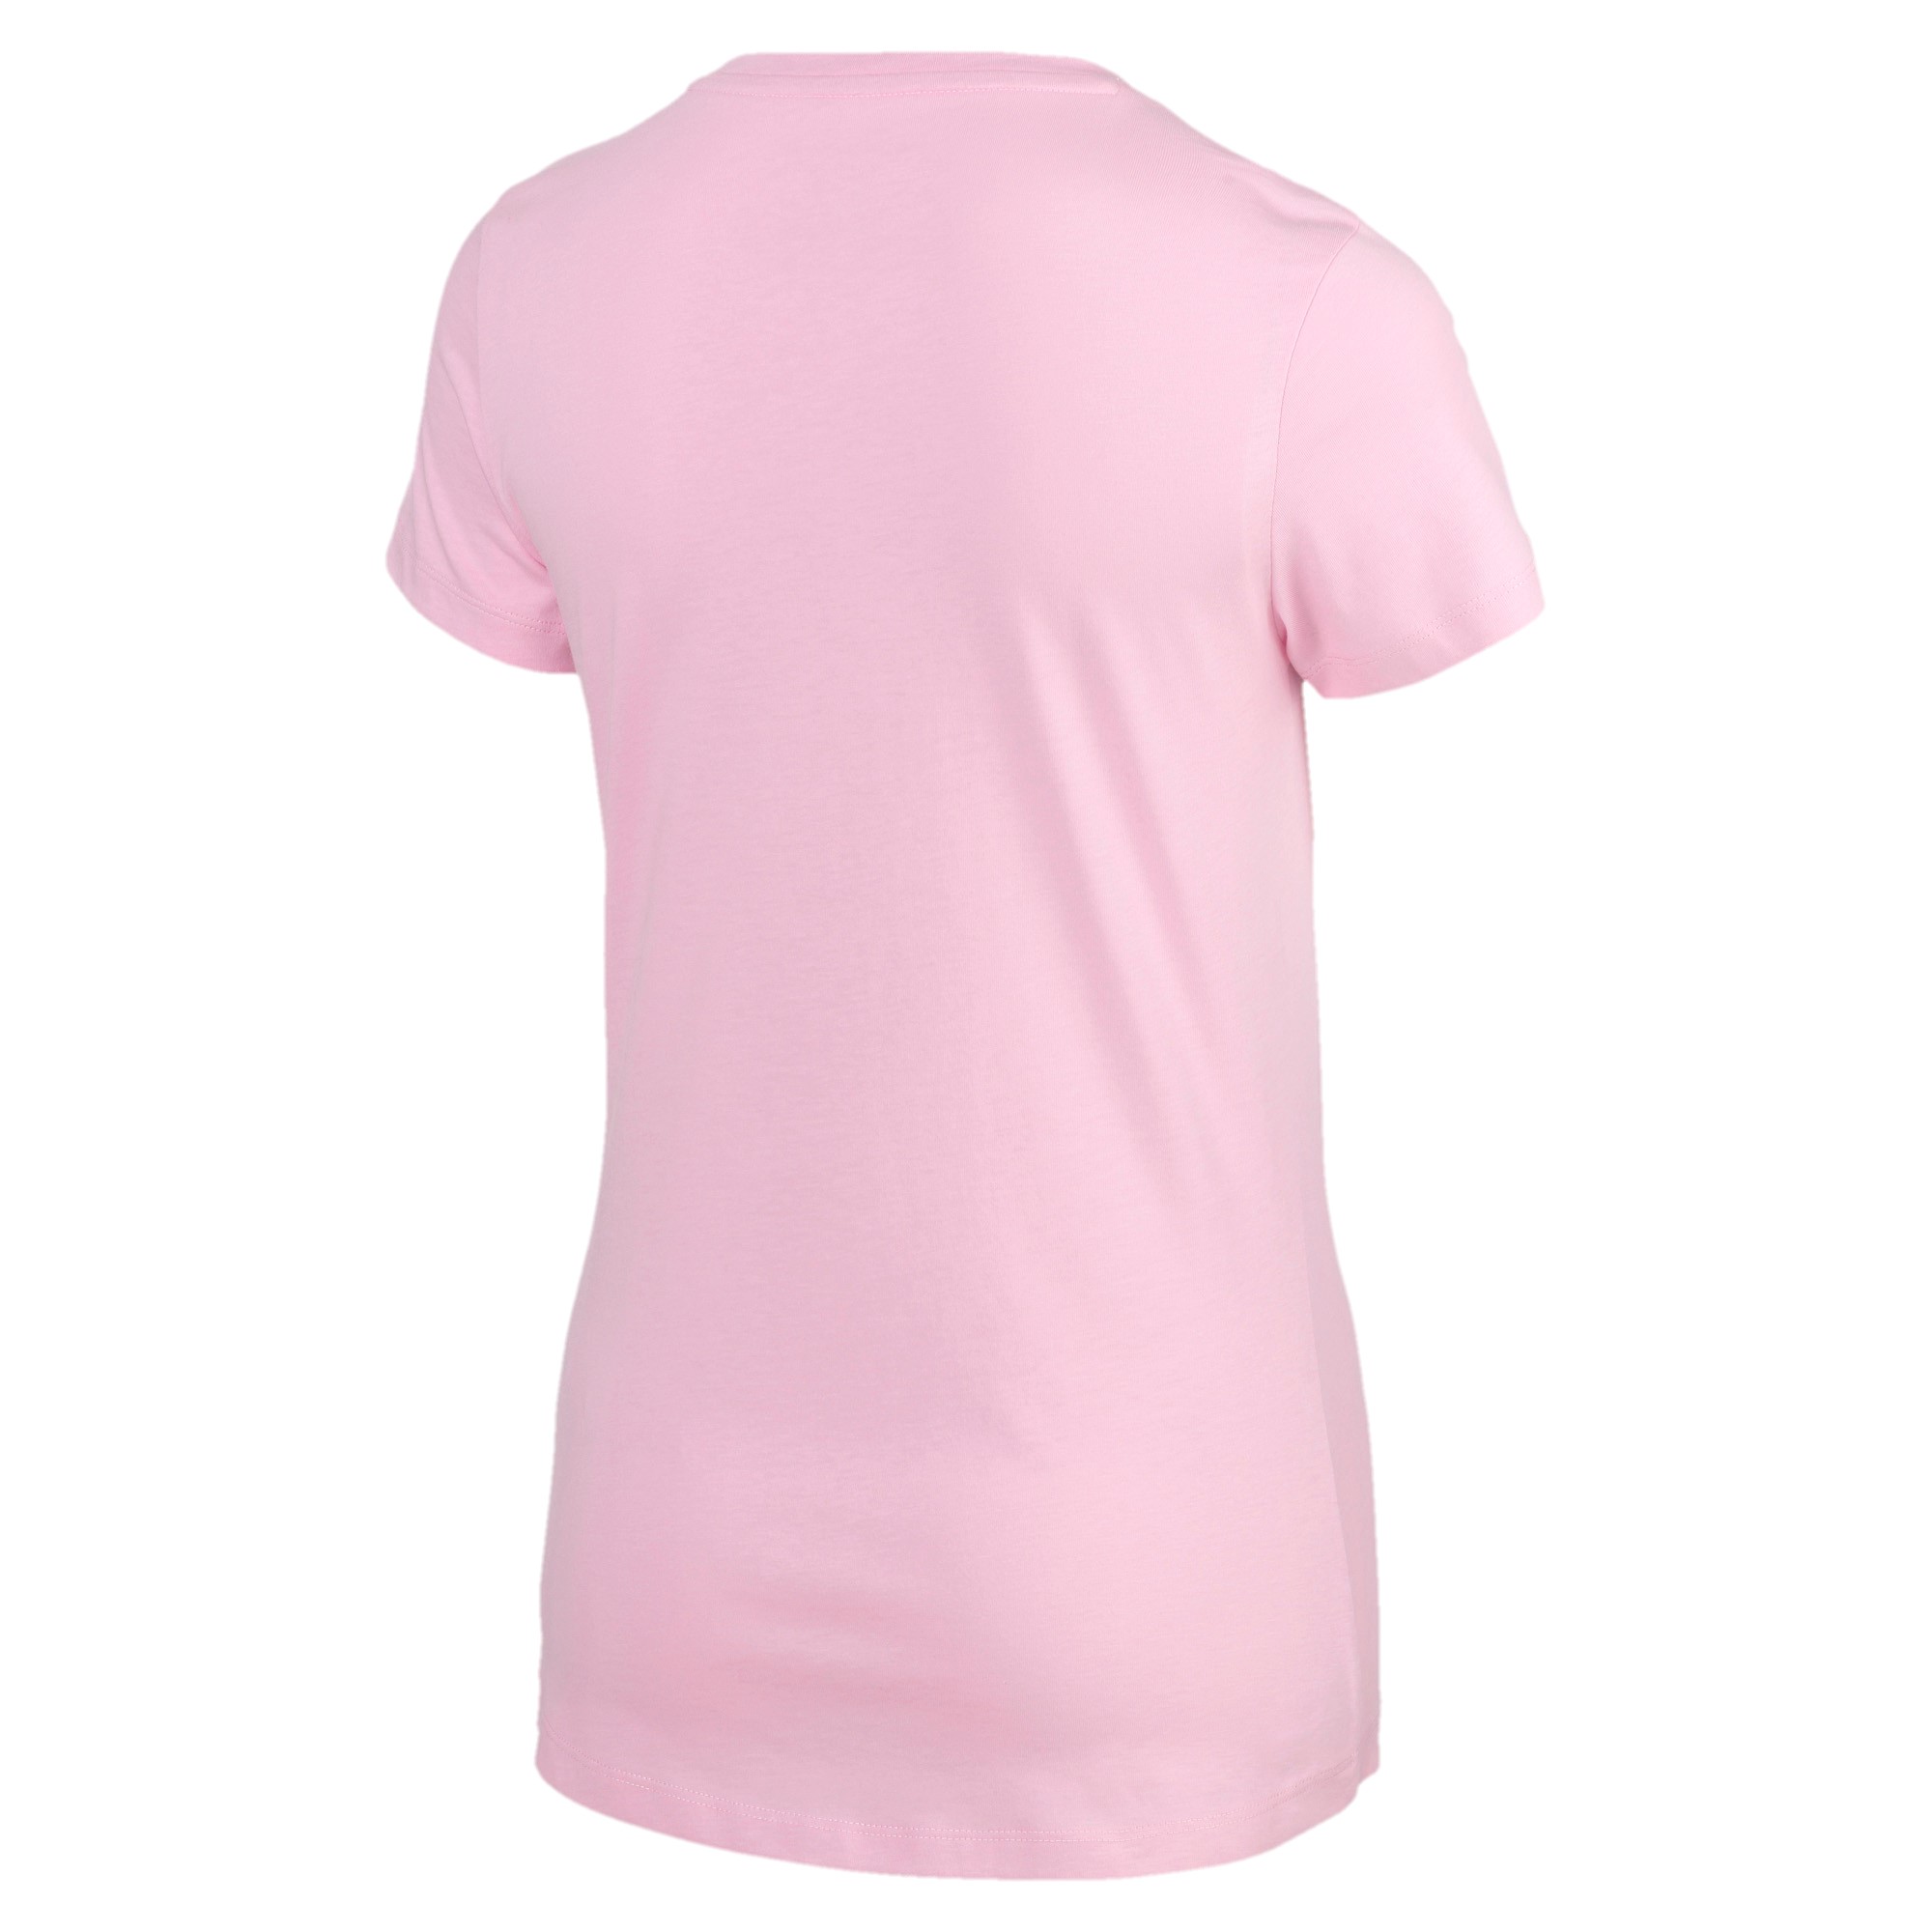 PUMA Damen Essential Logo Tee T-Shirt Pale Pink 853455 21